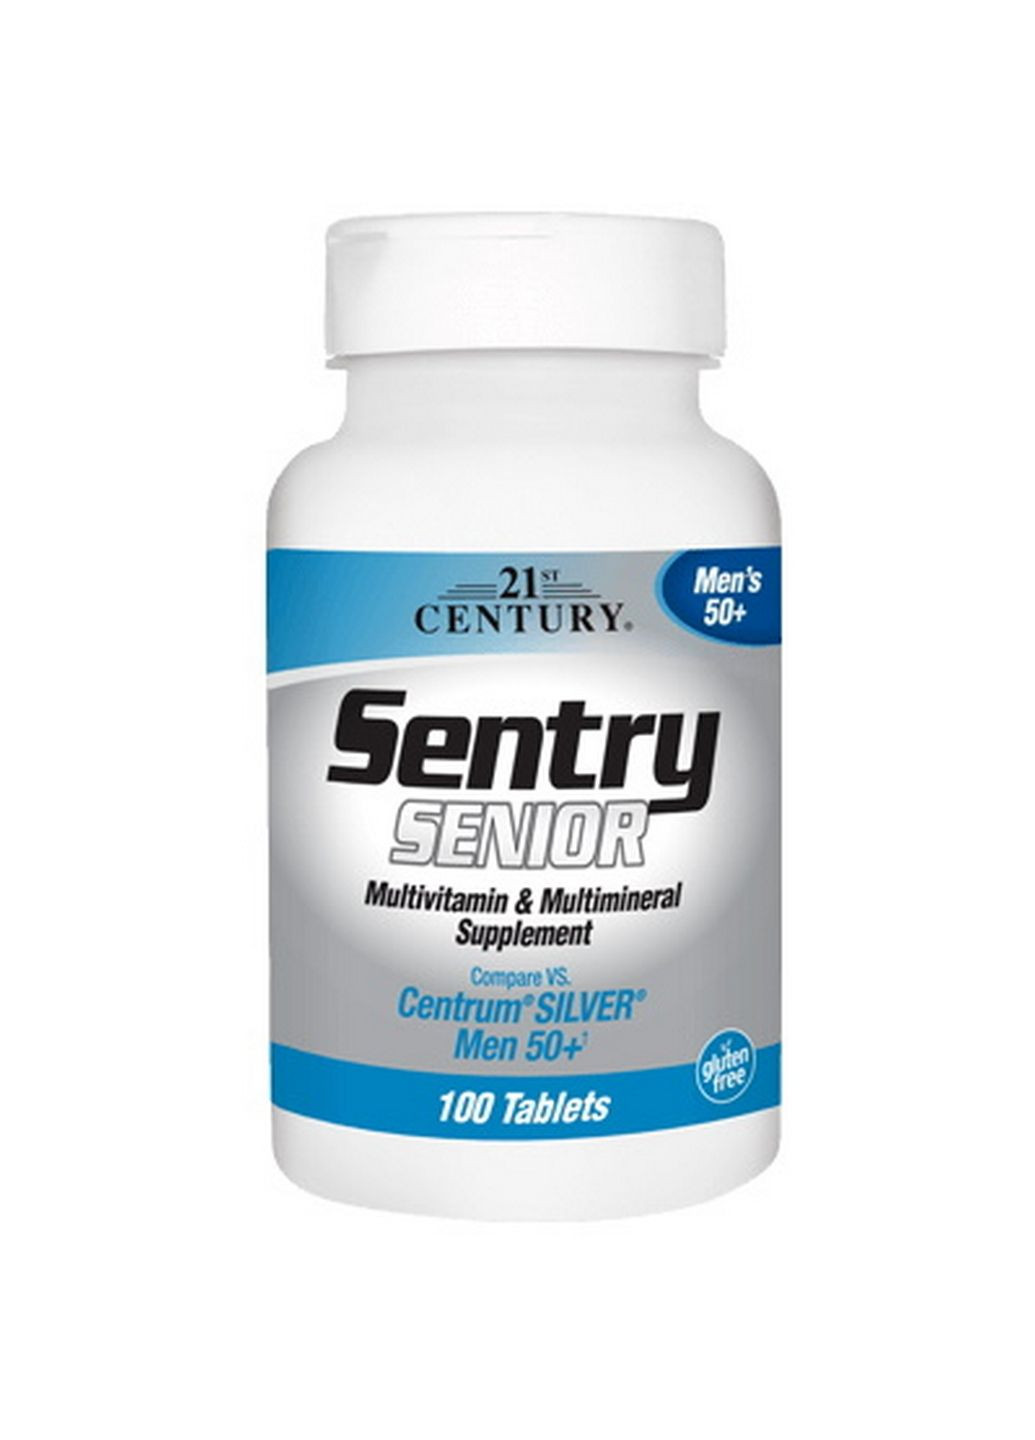 Витамины и минералы Sentry Senior Mens 50+, 100 таблеток 21st Century (293341554)